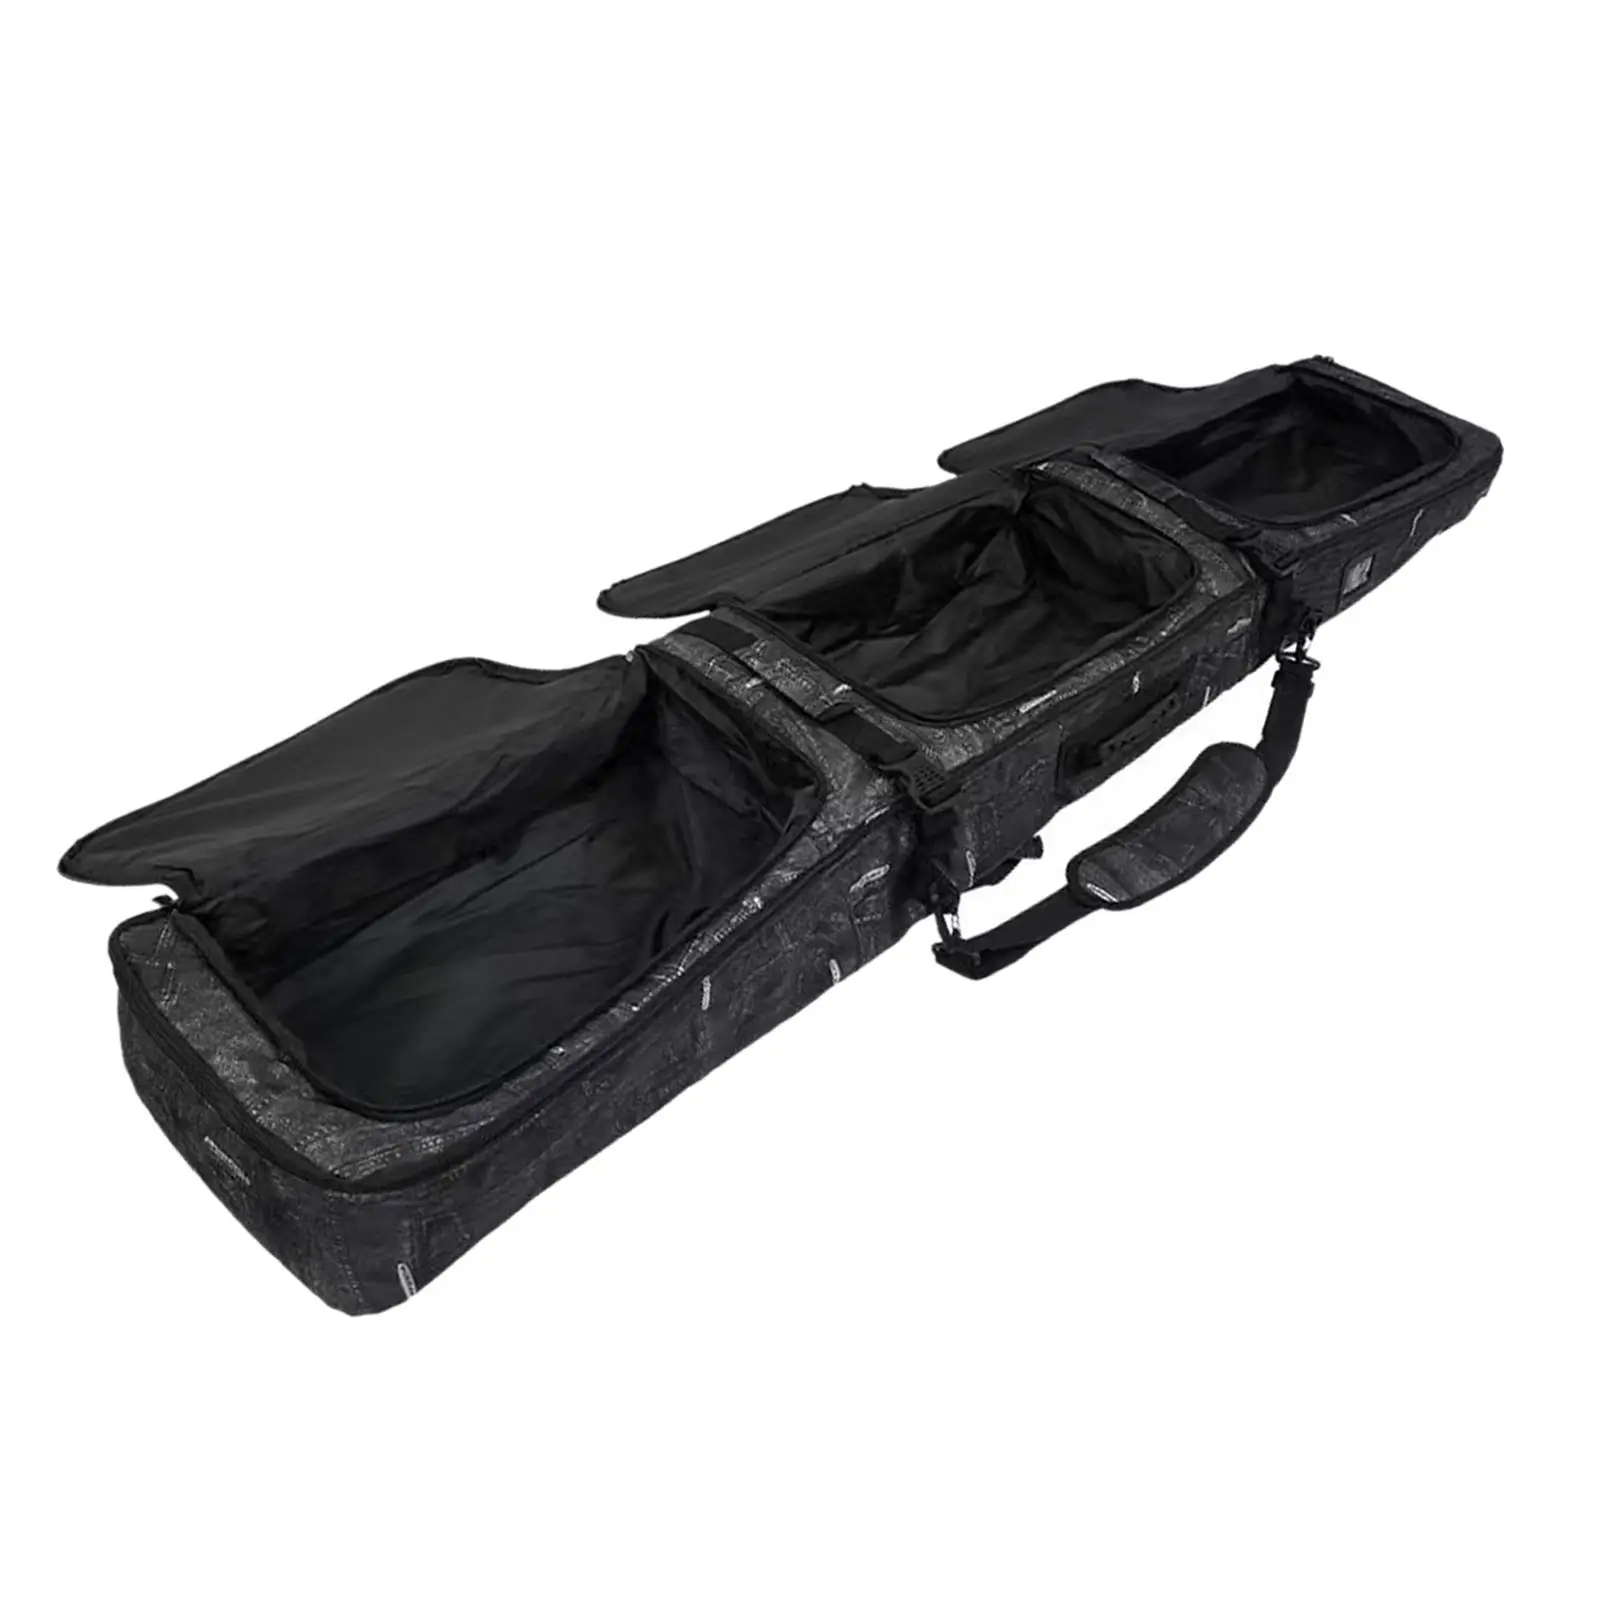 Snowboard Bag with Wheels Foldable Large Capacity Ski Travel Bag Waterproof for Gloves Travel Longboard Training Women Men